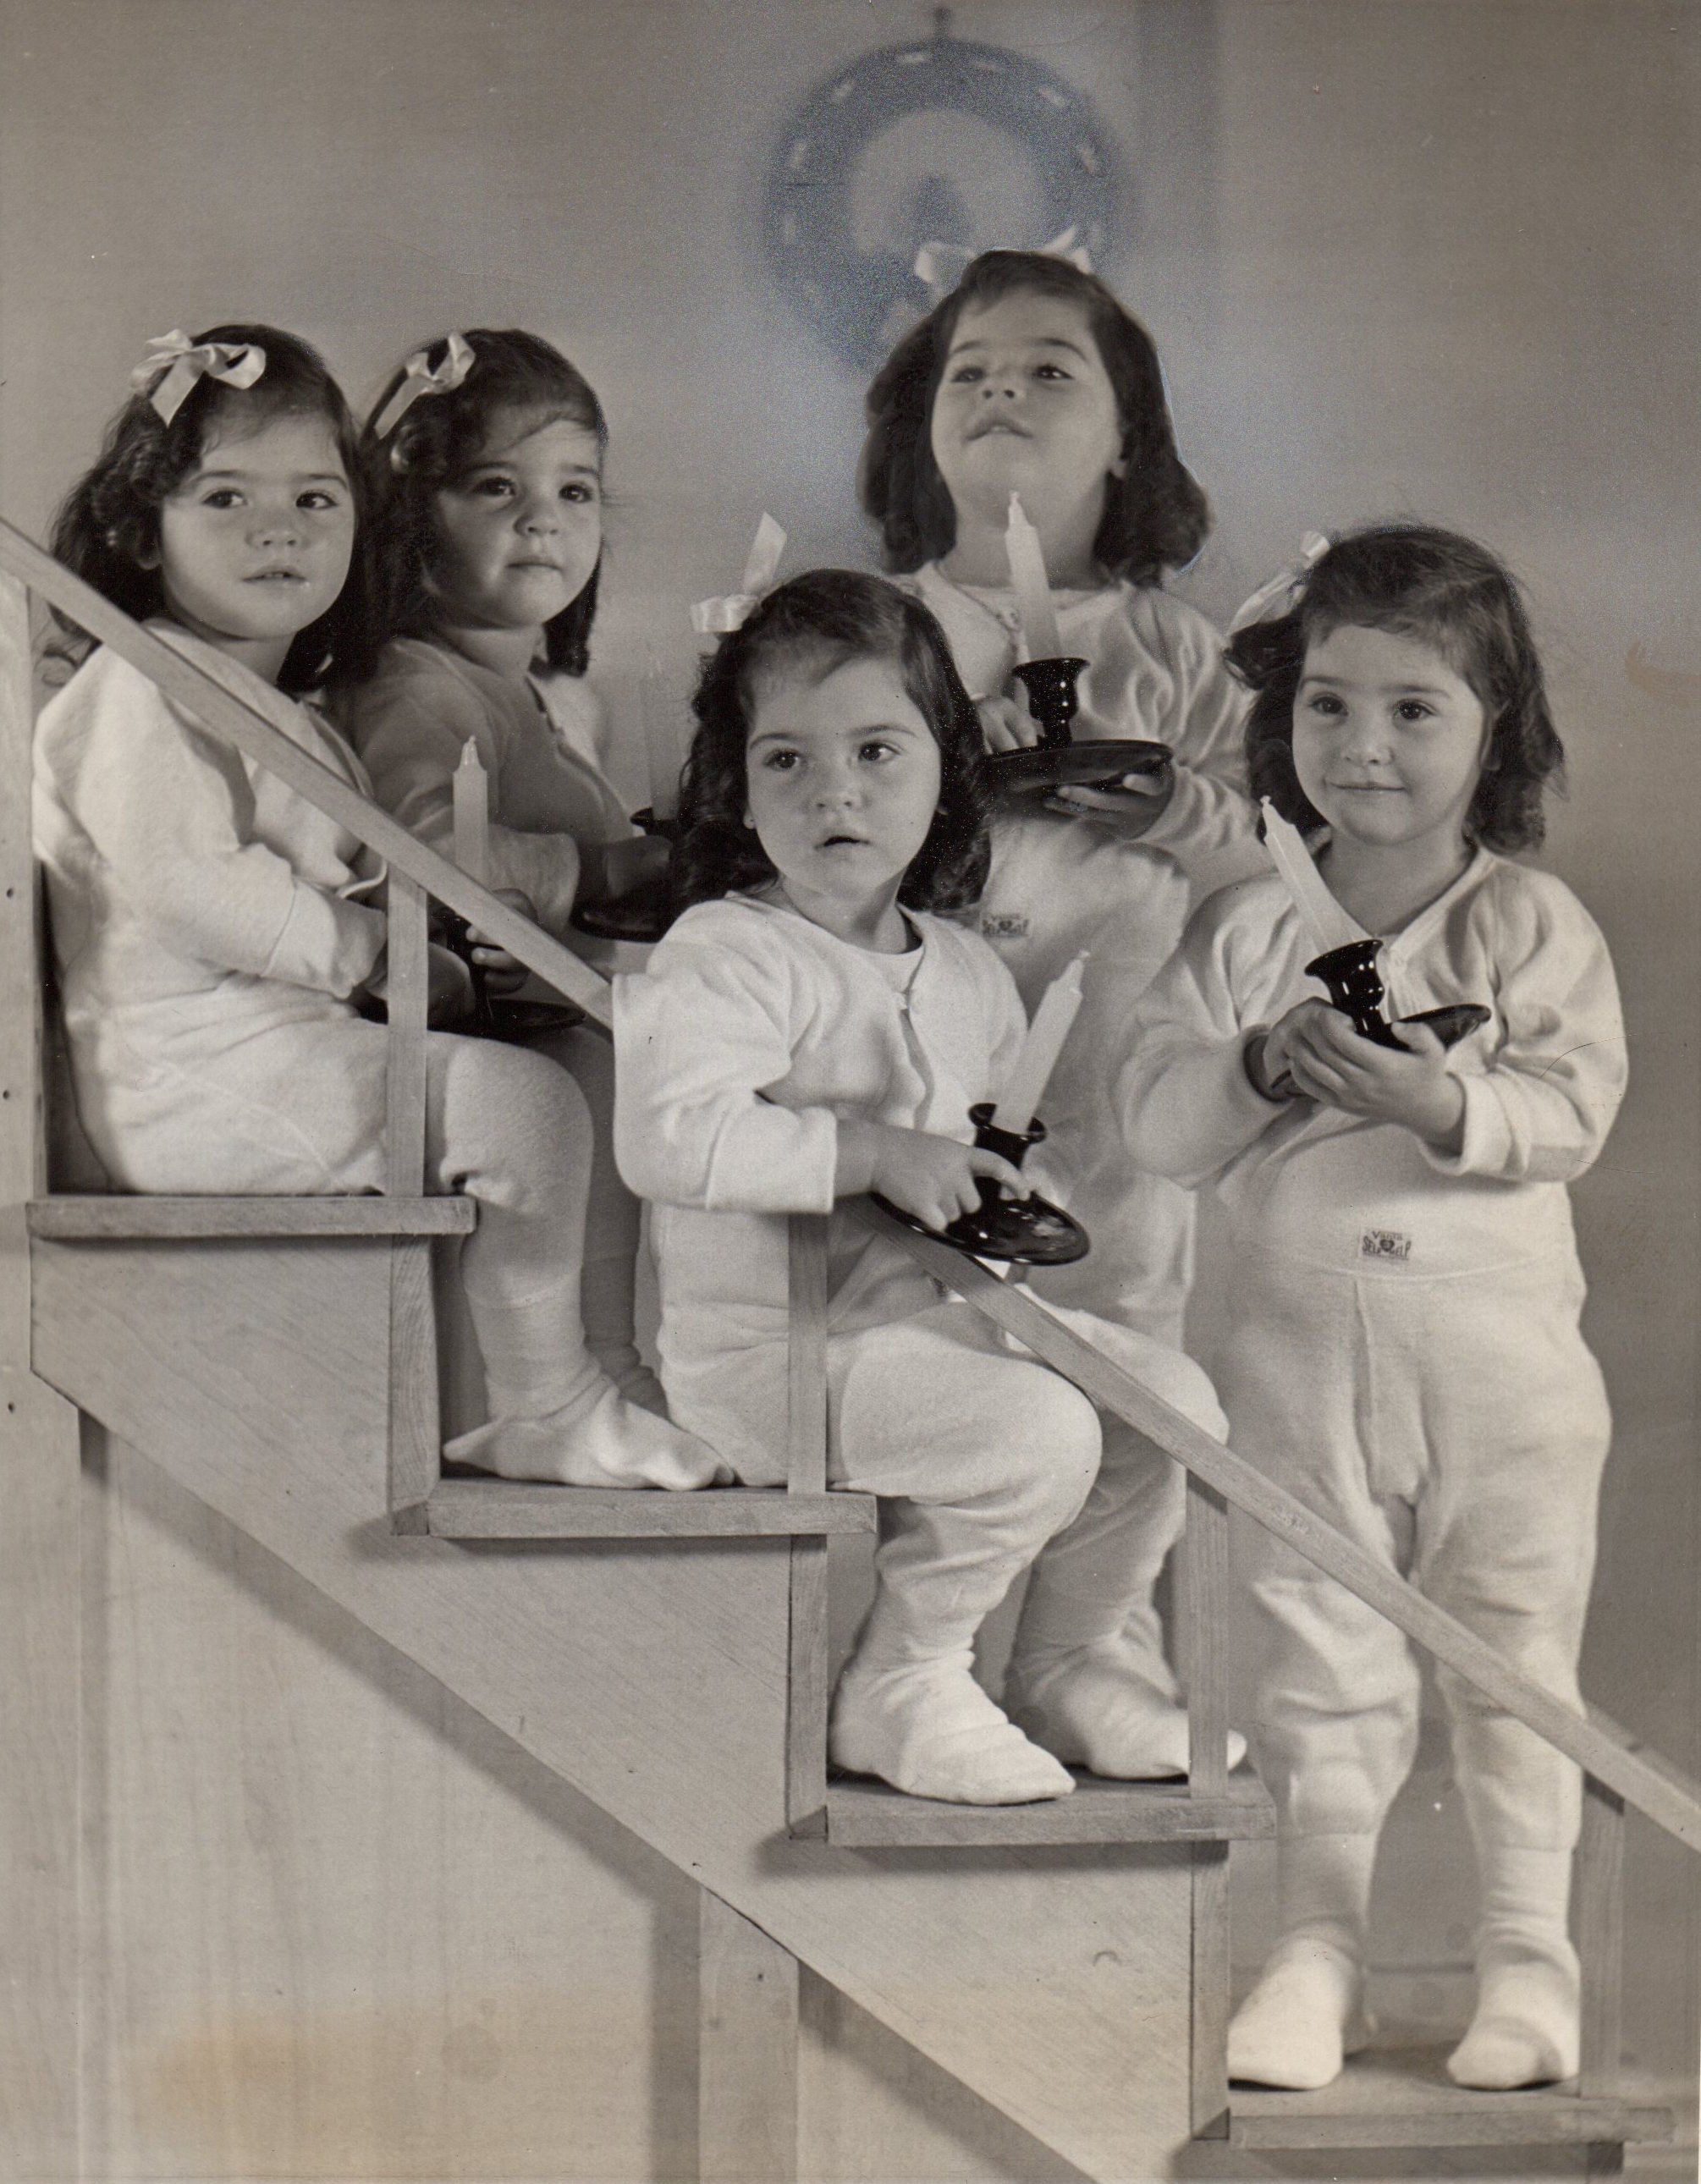 Annette, Yvonne, Cécile, Émilie, and Marie Dionne holding candles, 1938